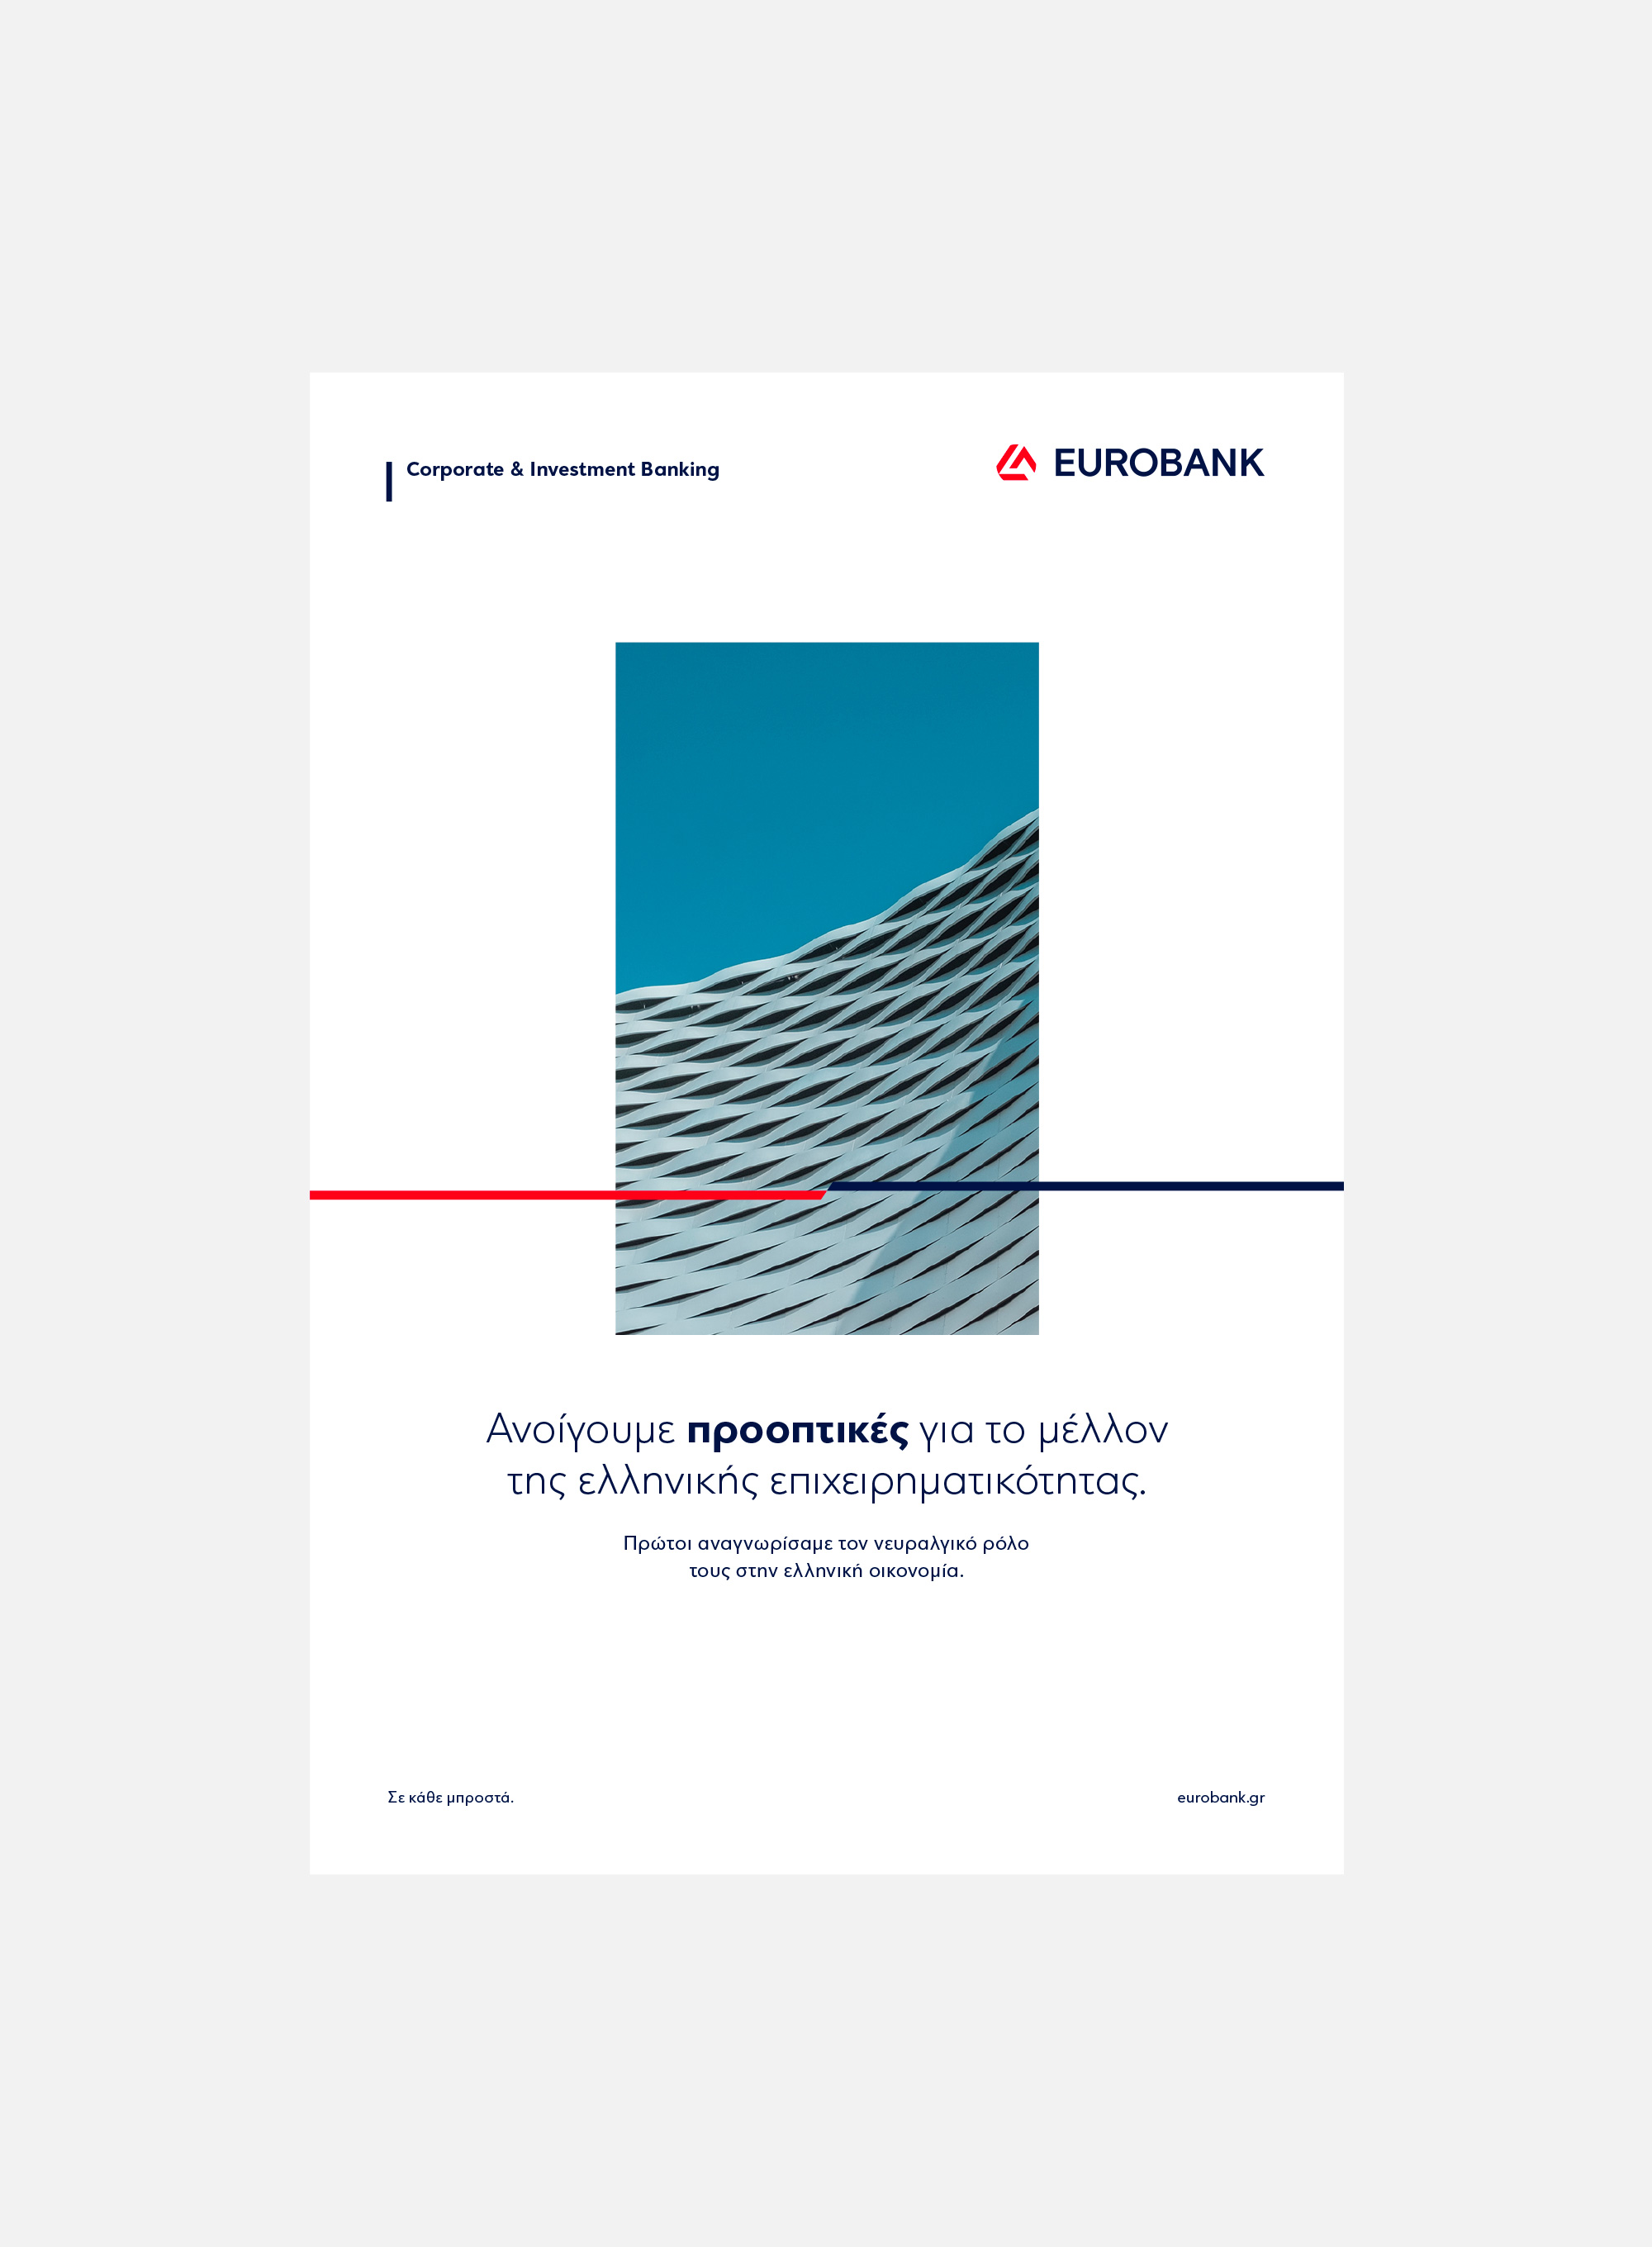 eurobank branding segments ad sample Α kommigraphics